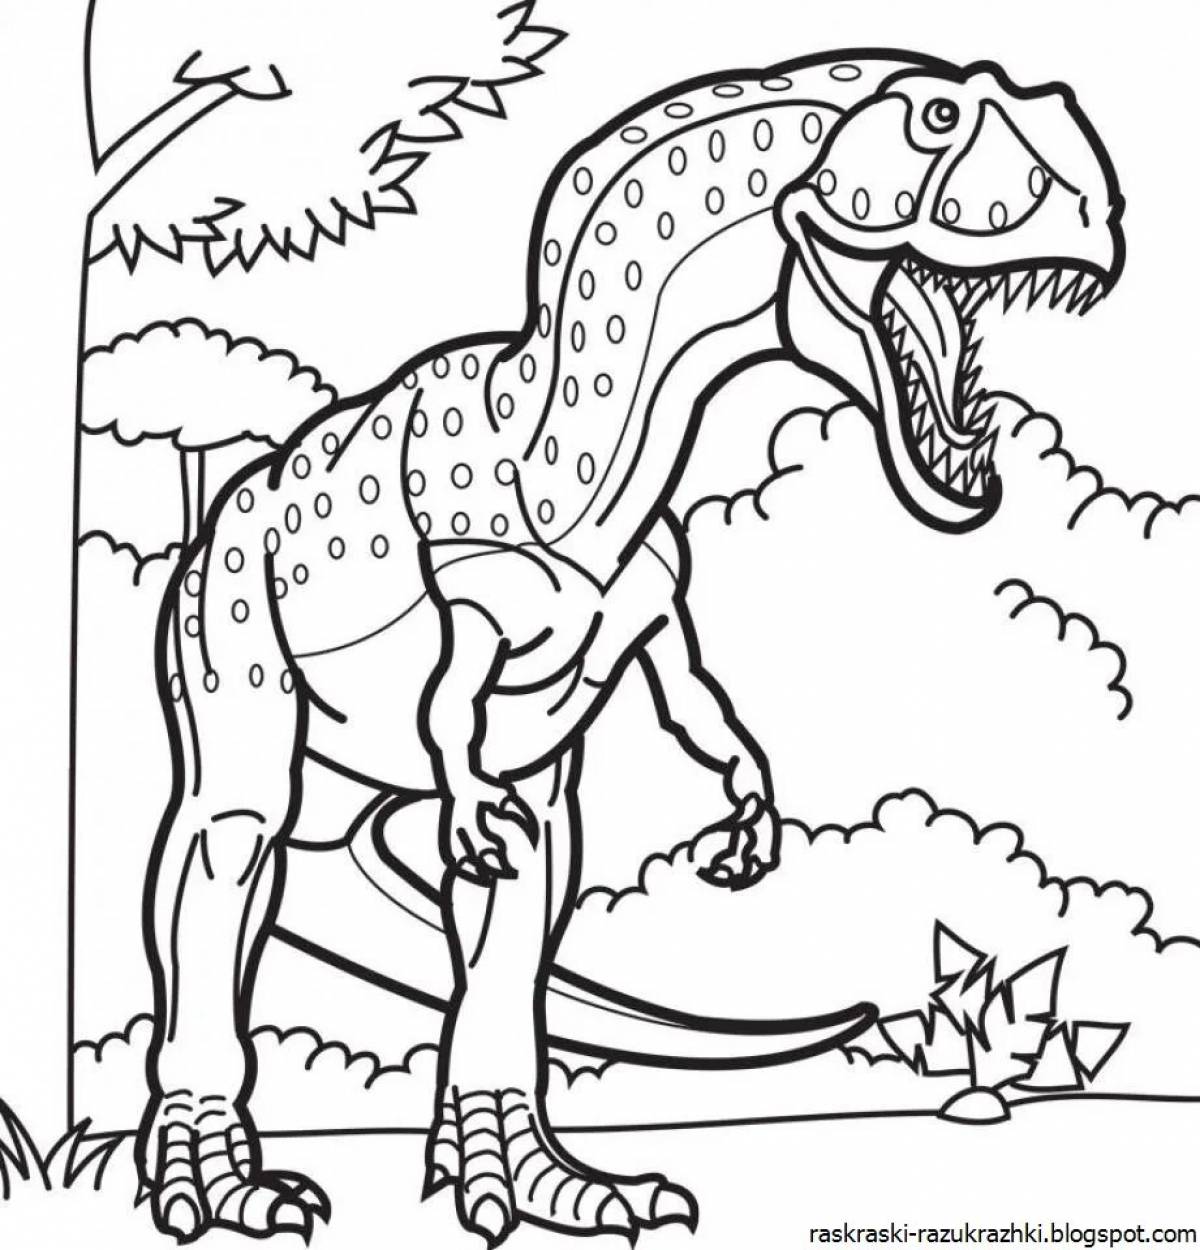 Mega dinosaurs #19